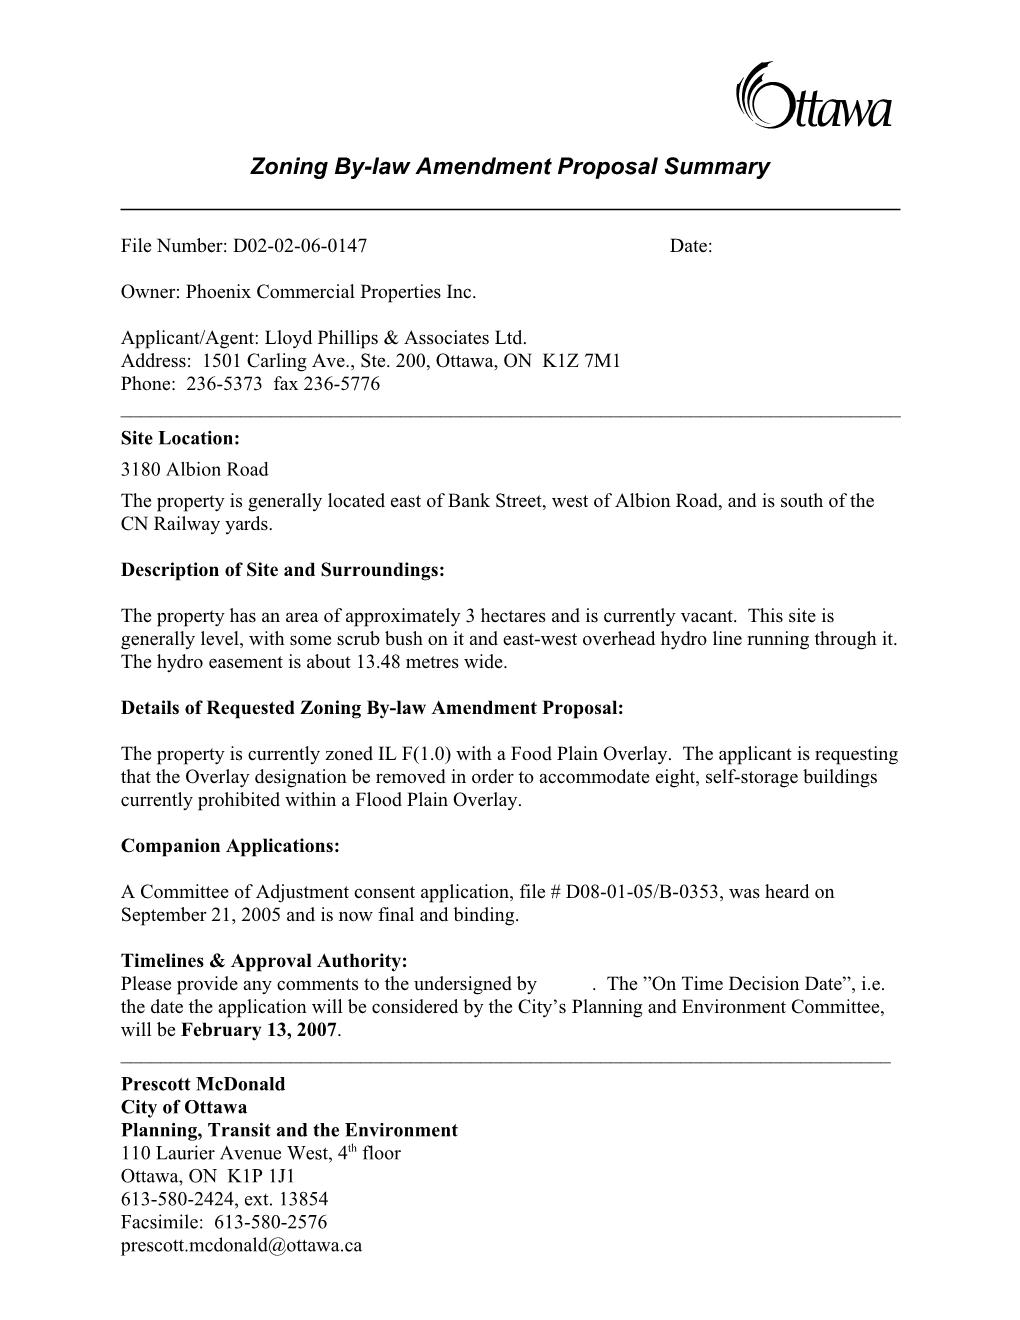 Zoning By-Law Amendment Proposal Summary